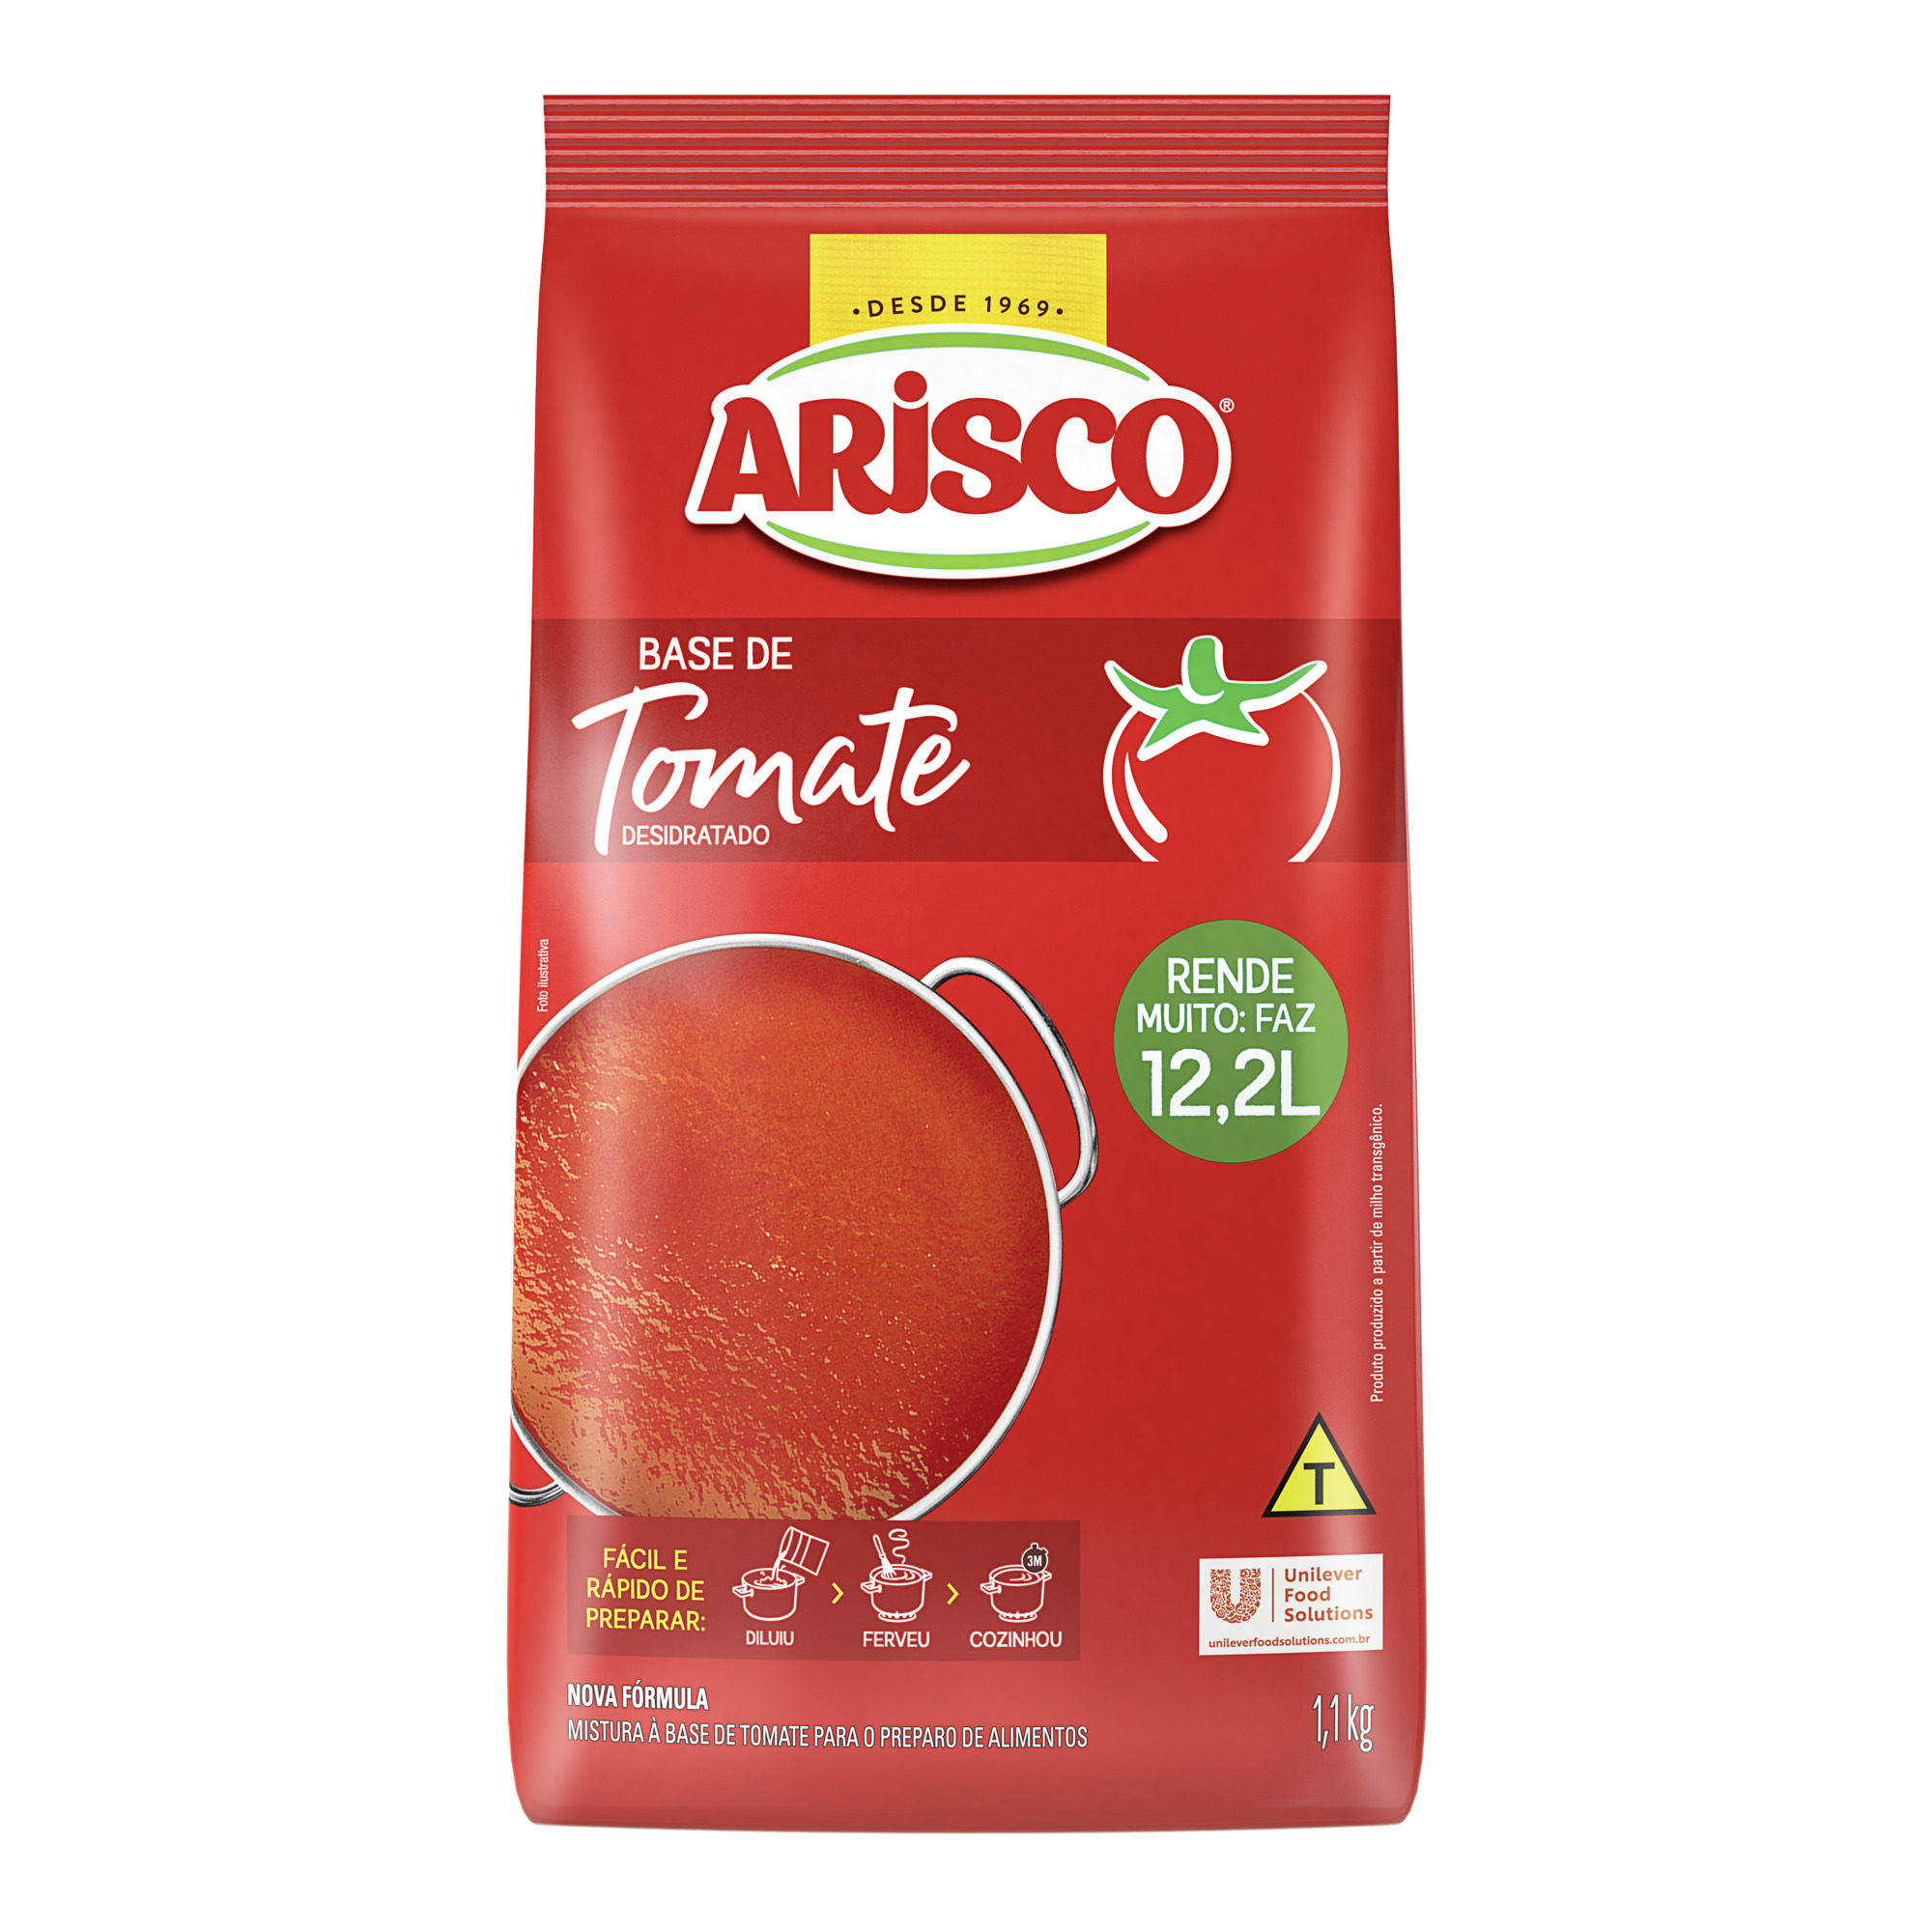 Base de Tomate Arisco Desidratado Pacote 1,1kg